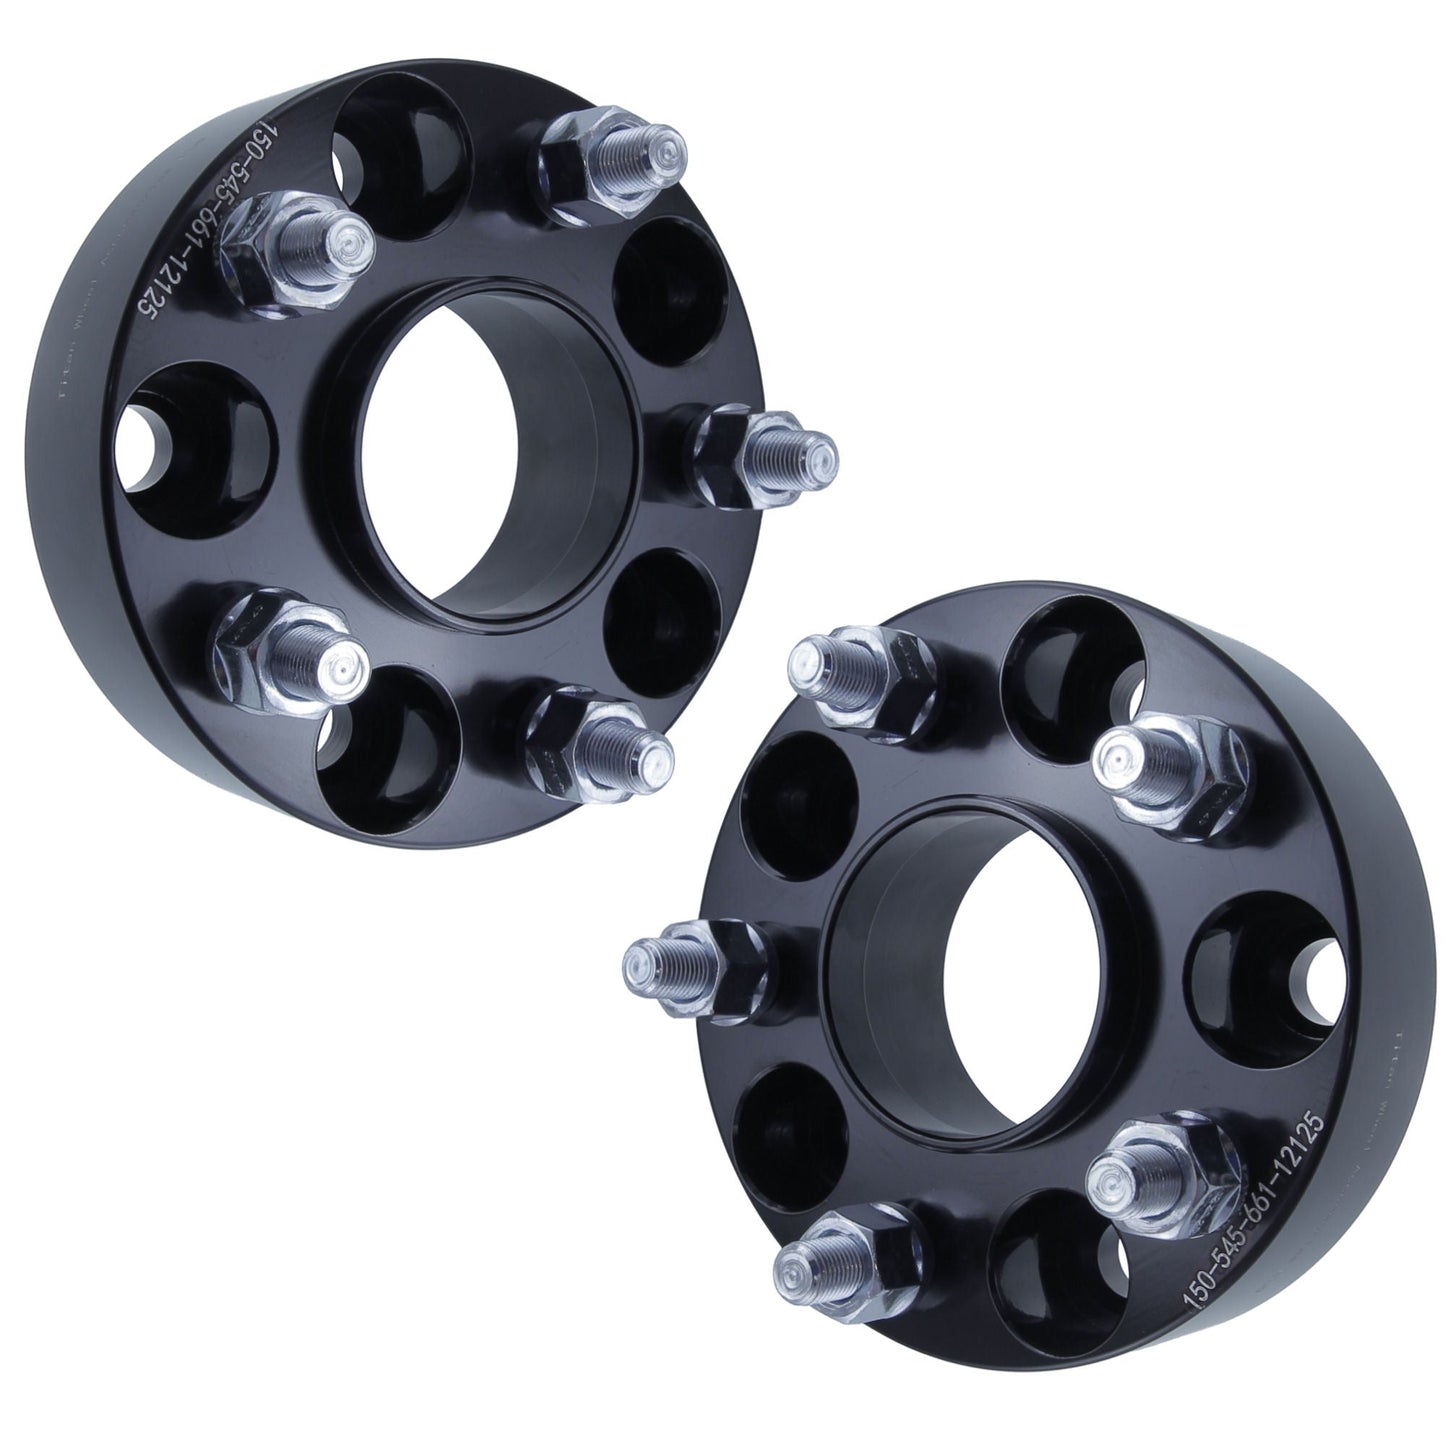 50mm (2") Titan Wheel Spacers for Nissan Altima Maxima 350z 370z Infiniti G35 G37 Q50 | 5x114.3 (5x4.5) | 66.1 Hubcentric |12x1.25 Studs | Set of 4 | Titan Wheel Accessories